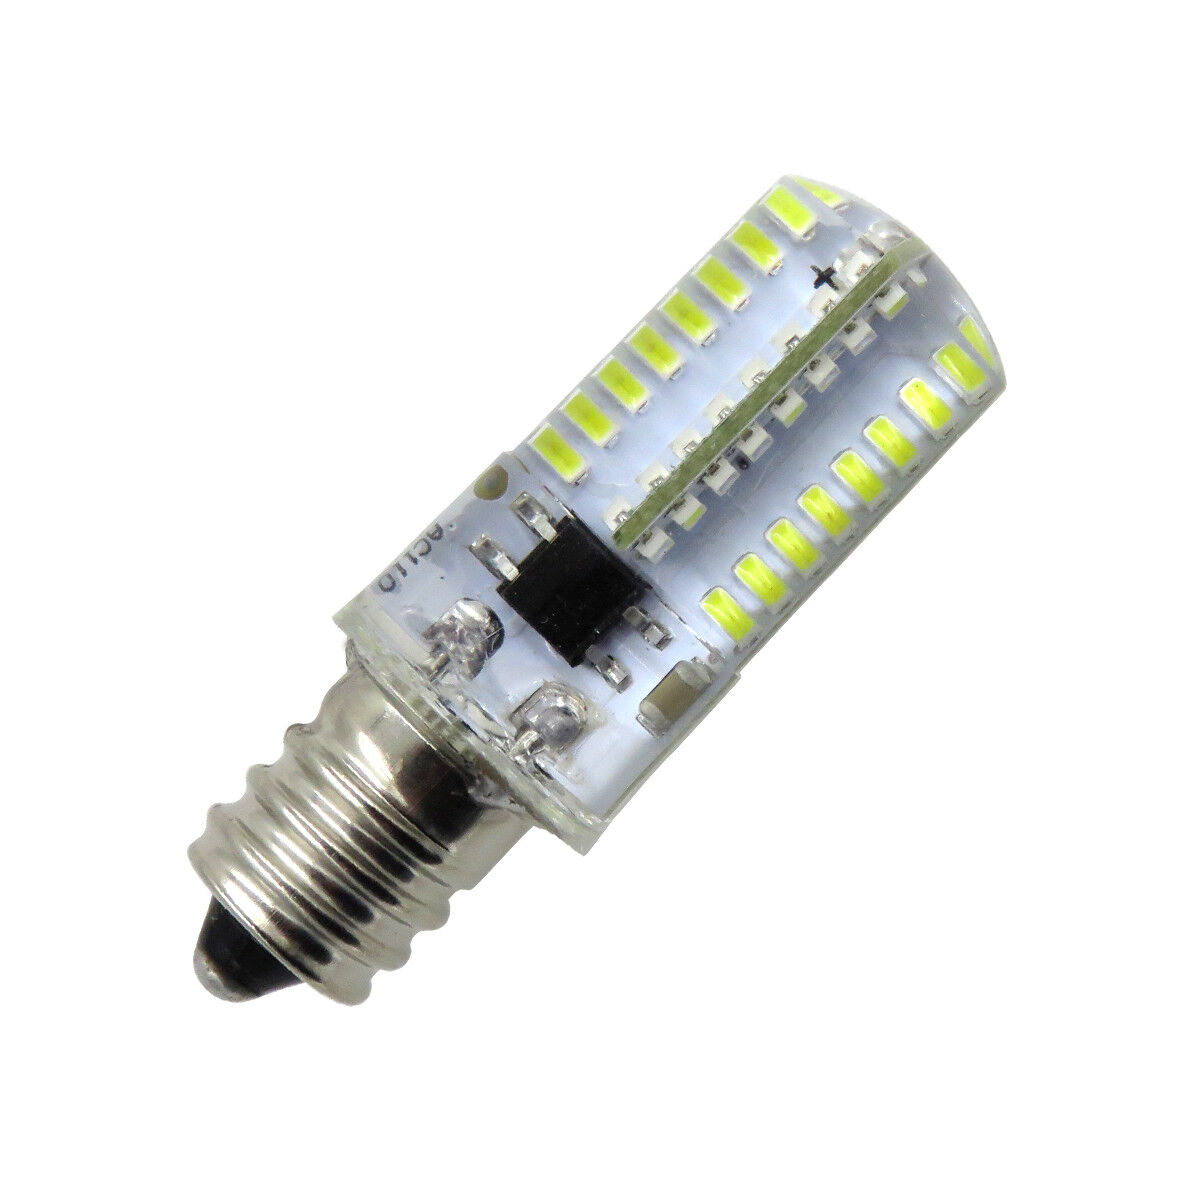 10pcs E12 Candelabra C7 64-3014 SMD LED Light Lamp Bulb Fit PQ1500S White 110V  Unbranded Does not apply - фотография #2